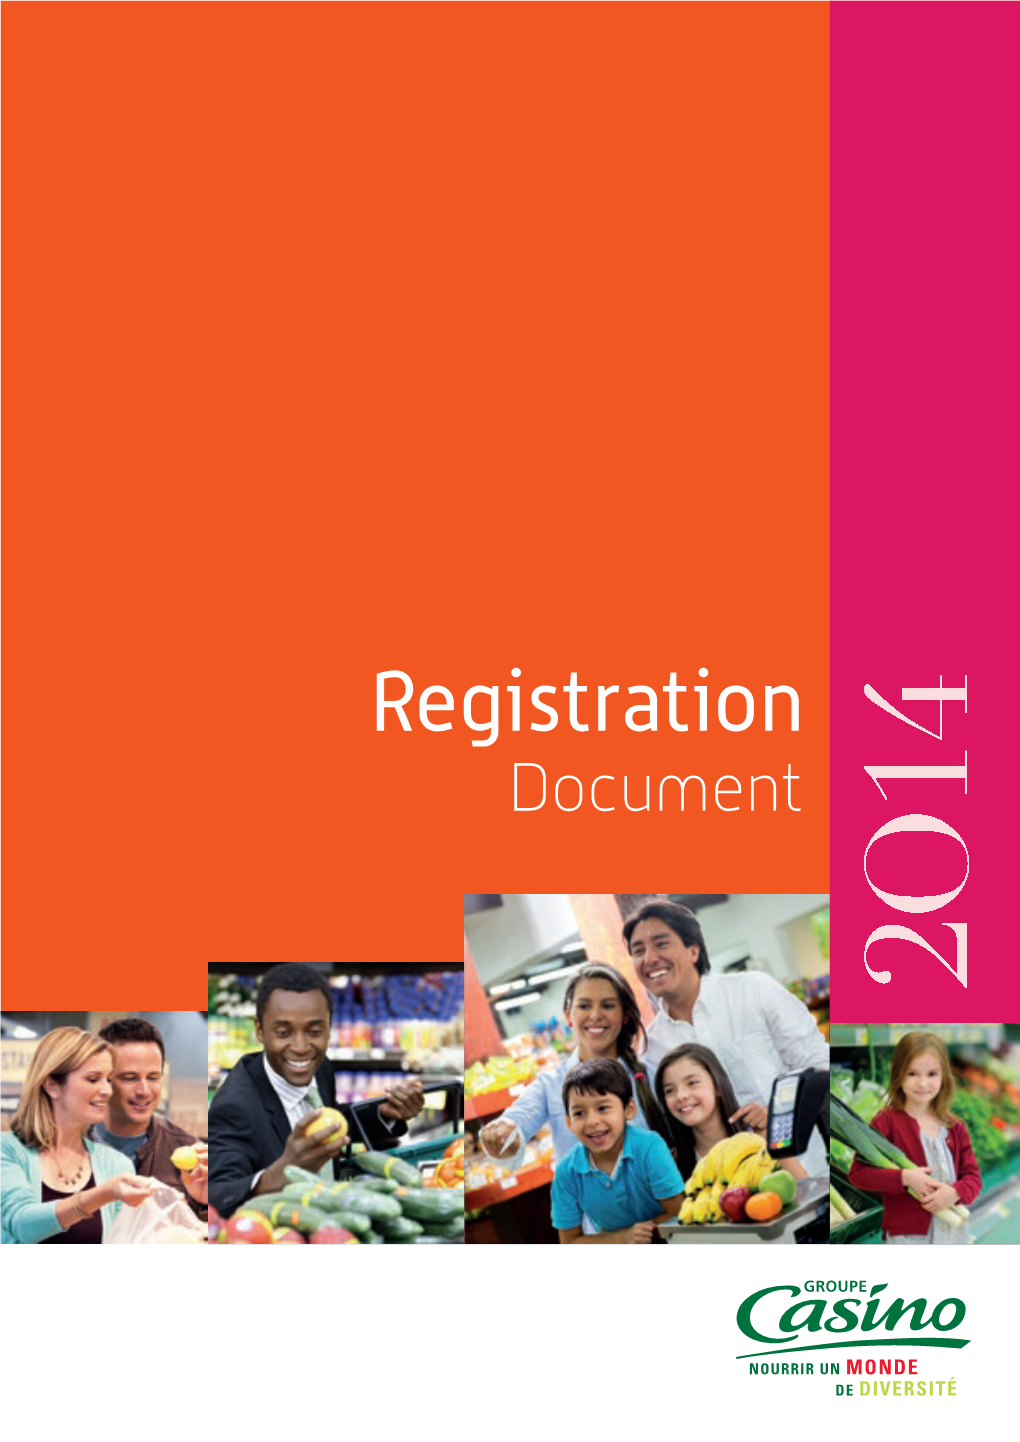 Registration Document Summary